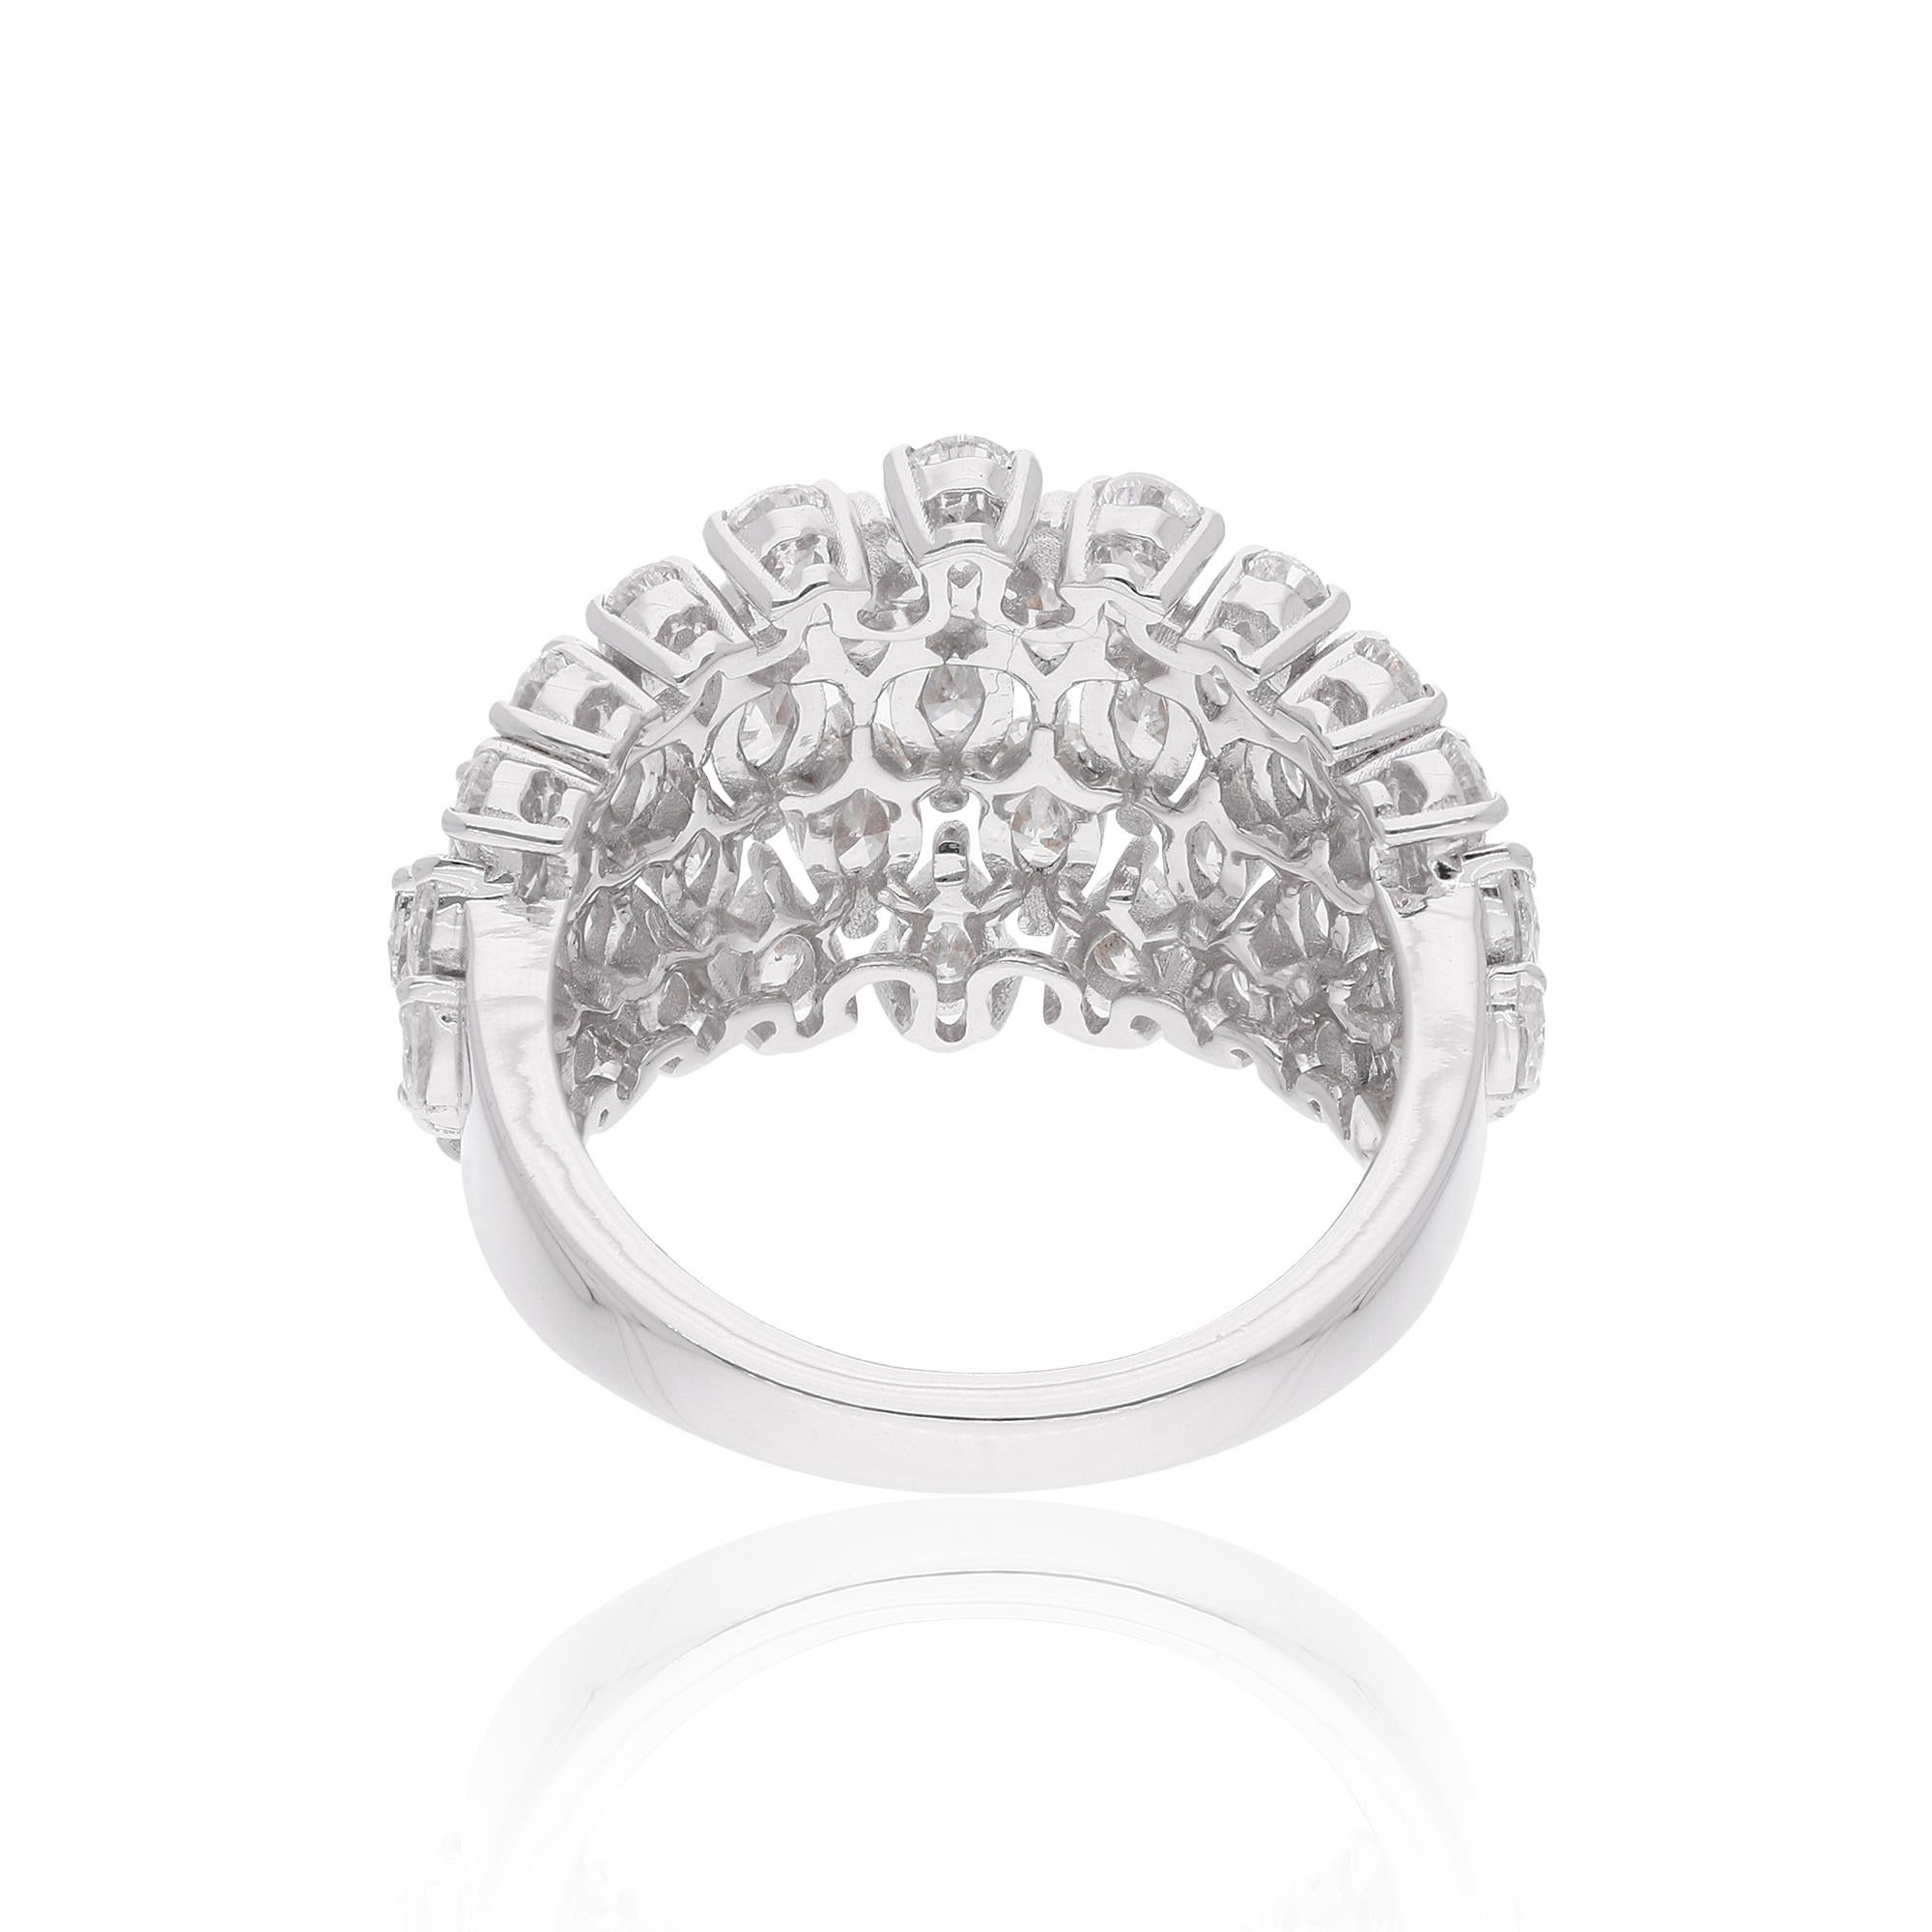 3.6 Carat Oval Marquise & Pear Diamond Cocktail Ring 18 Karat White Gold Jewelry Pour femmes en vente